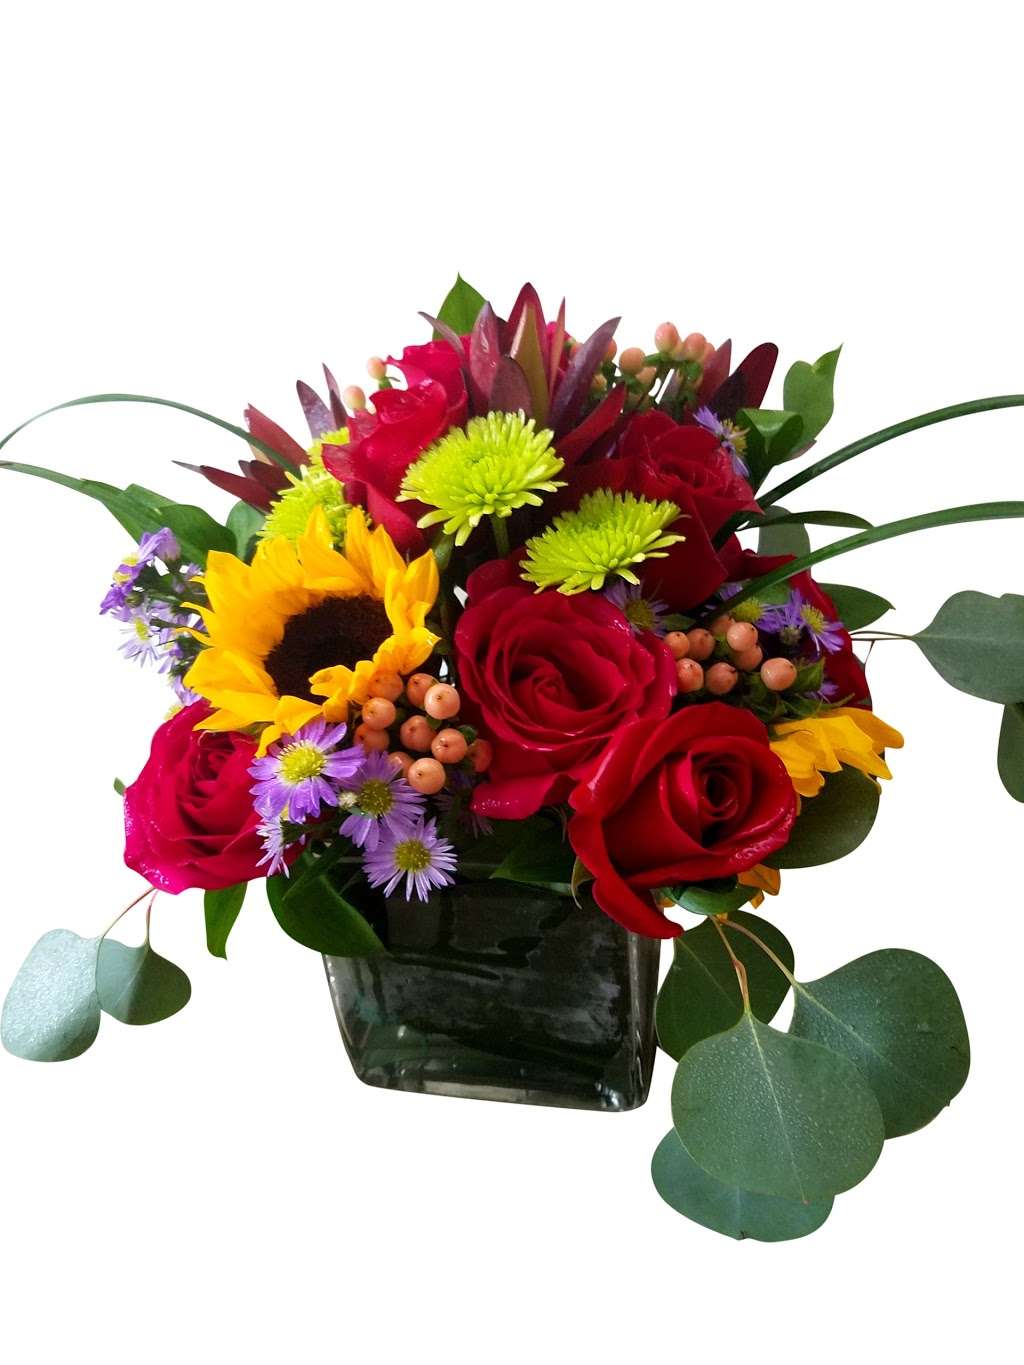 Secondhand Rose Florals | 2216 Snetterton Ln, Upper Marlboro, MD 20774 | Phone: (240) 245-7645